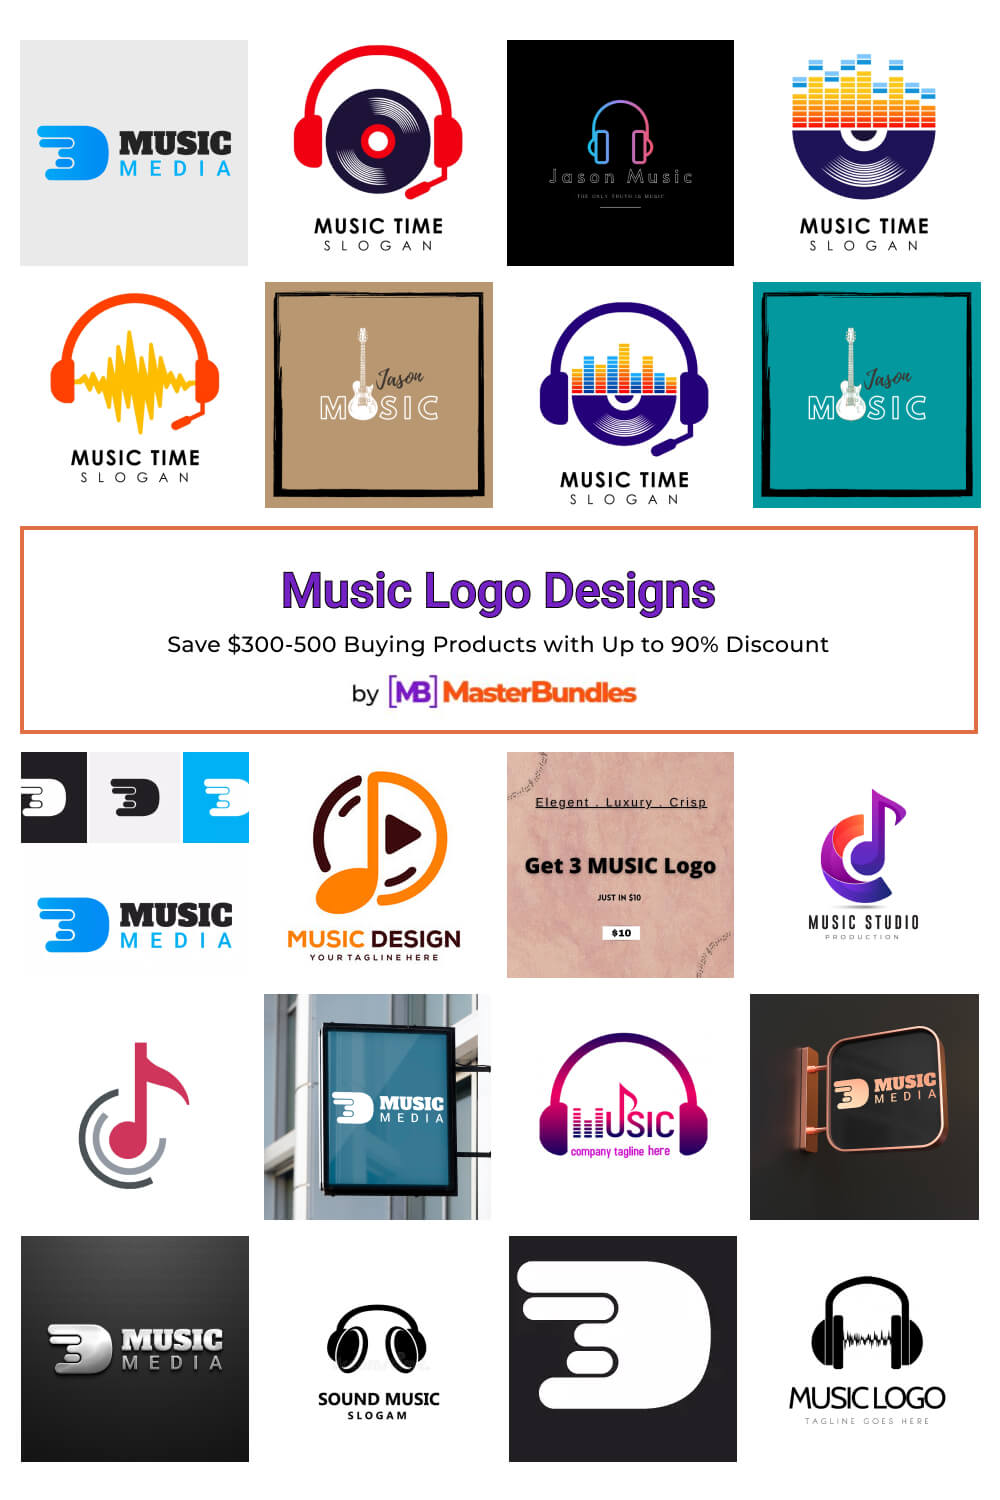 music logo designs pinterest image.